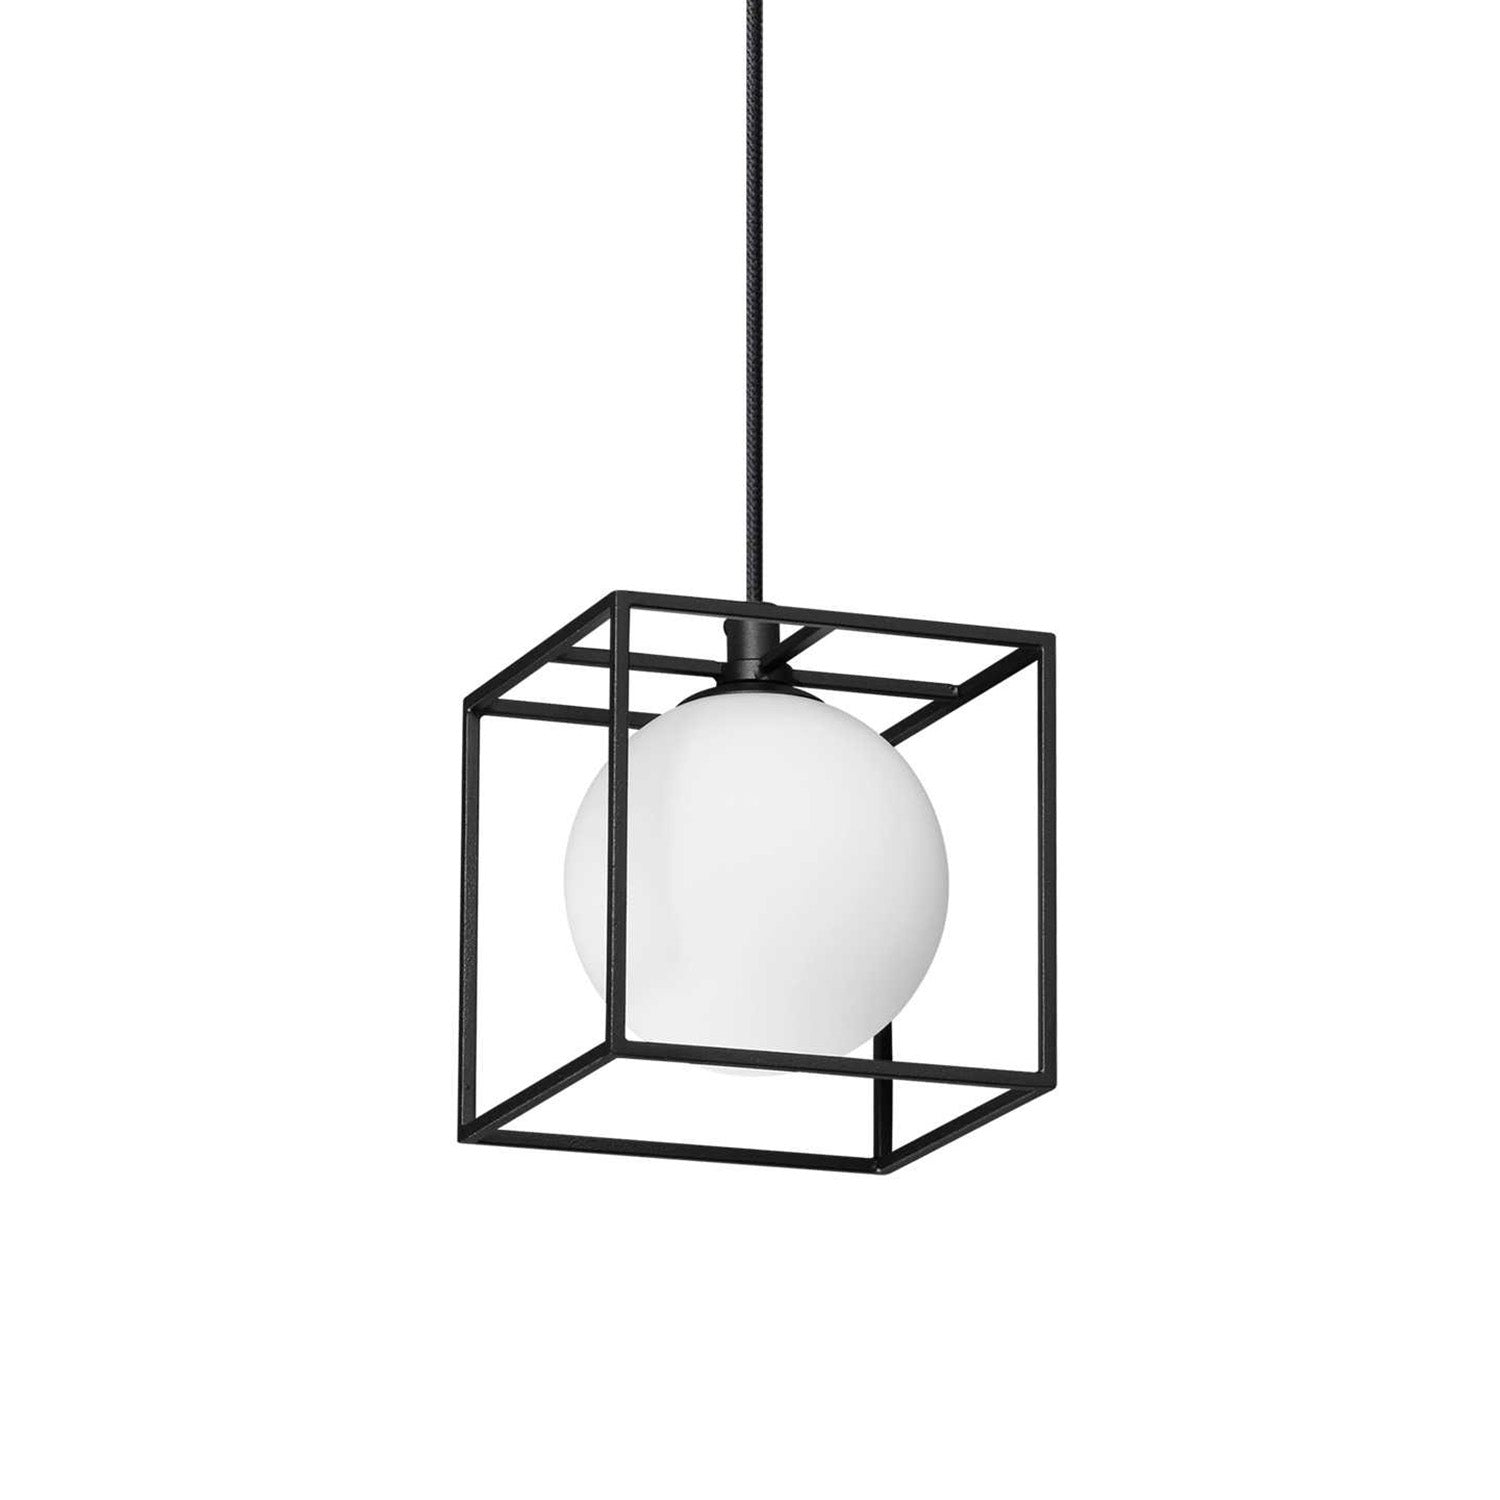 LINGOTTO - Cube metal pendant light with glass ball